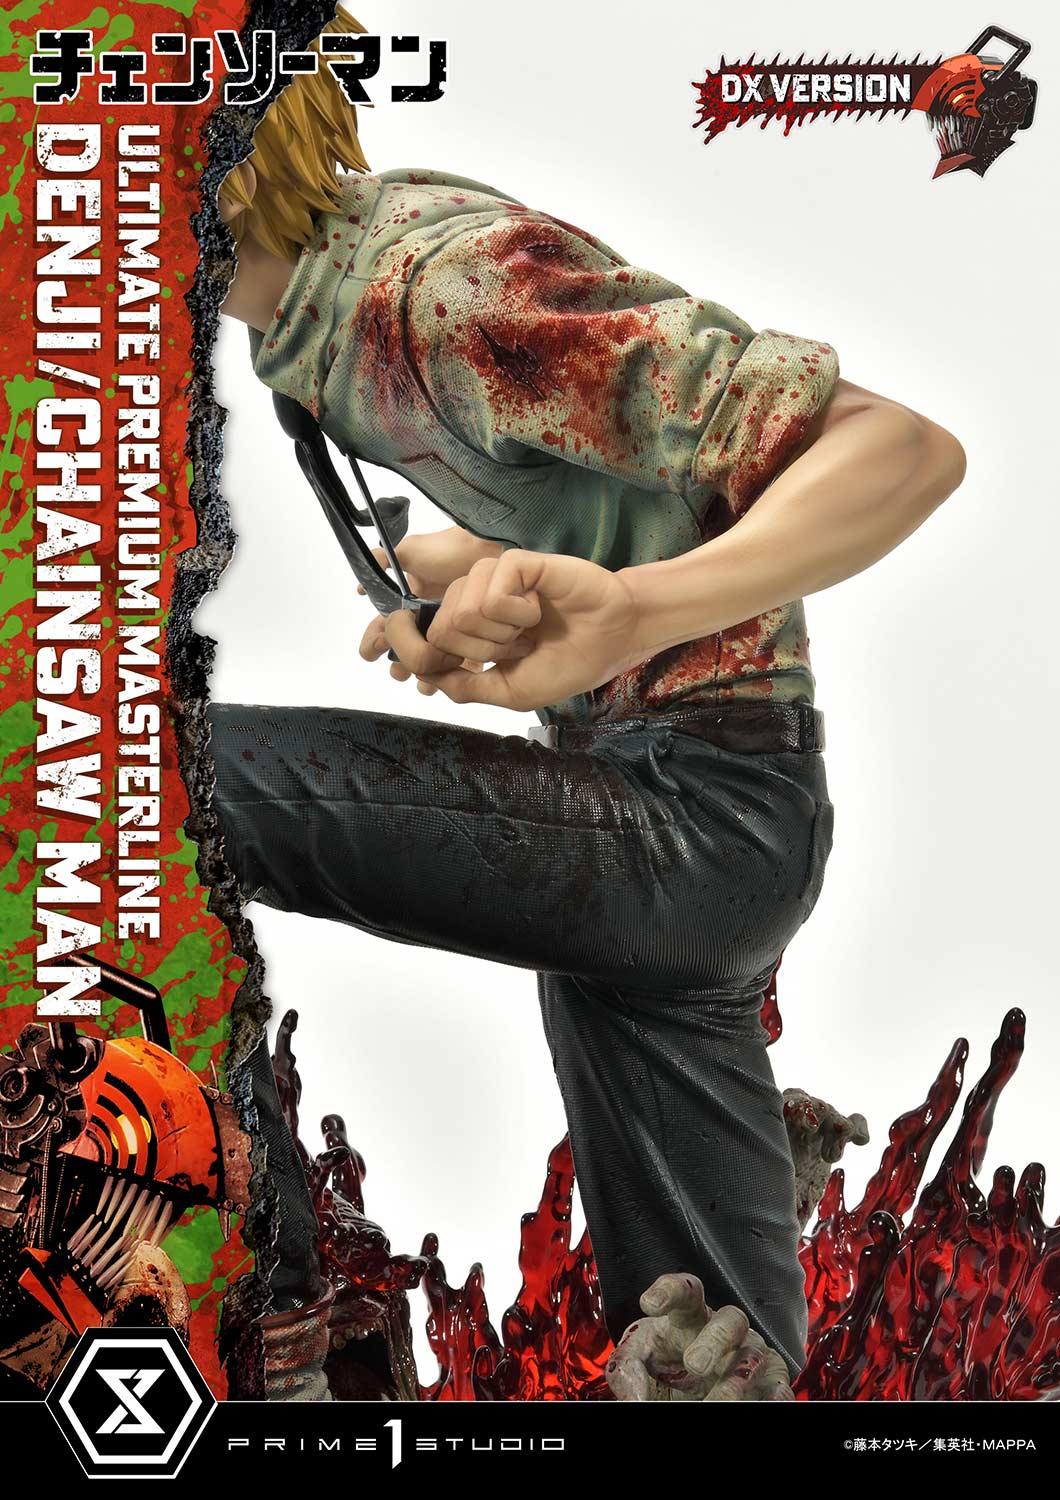 Ultimate Premium Masterline CHAINSAW MAN DENJI/CHAINSAW MAN DX Bonus  Version